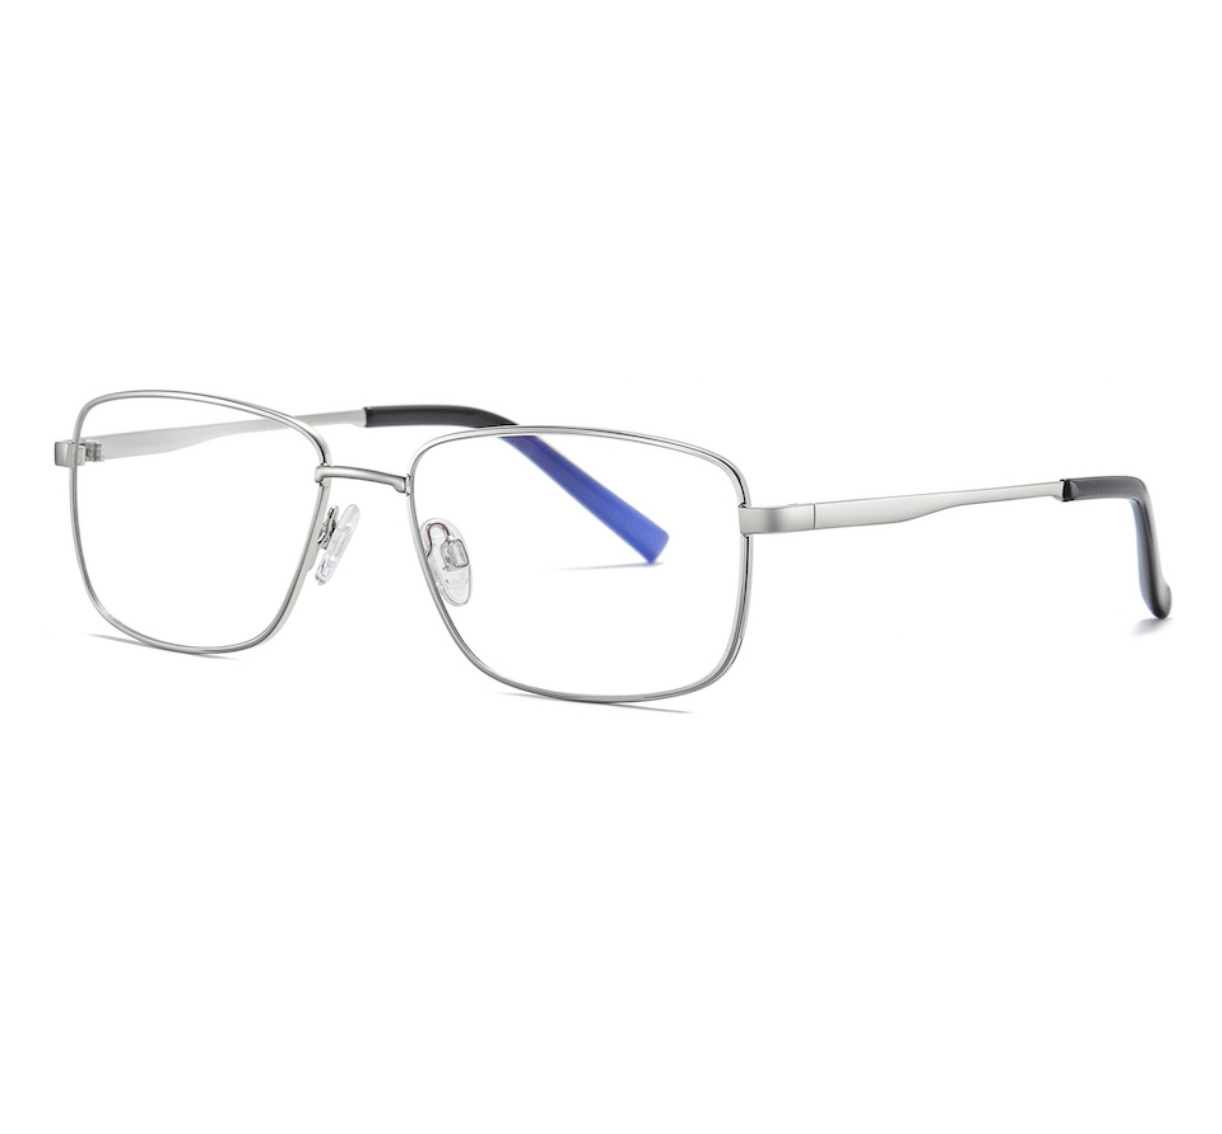 Silver metal eyeglass frames for women and men, Optical frames China, wholesale eyeglass frames, custom eyewear frames